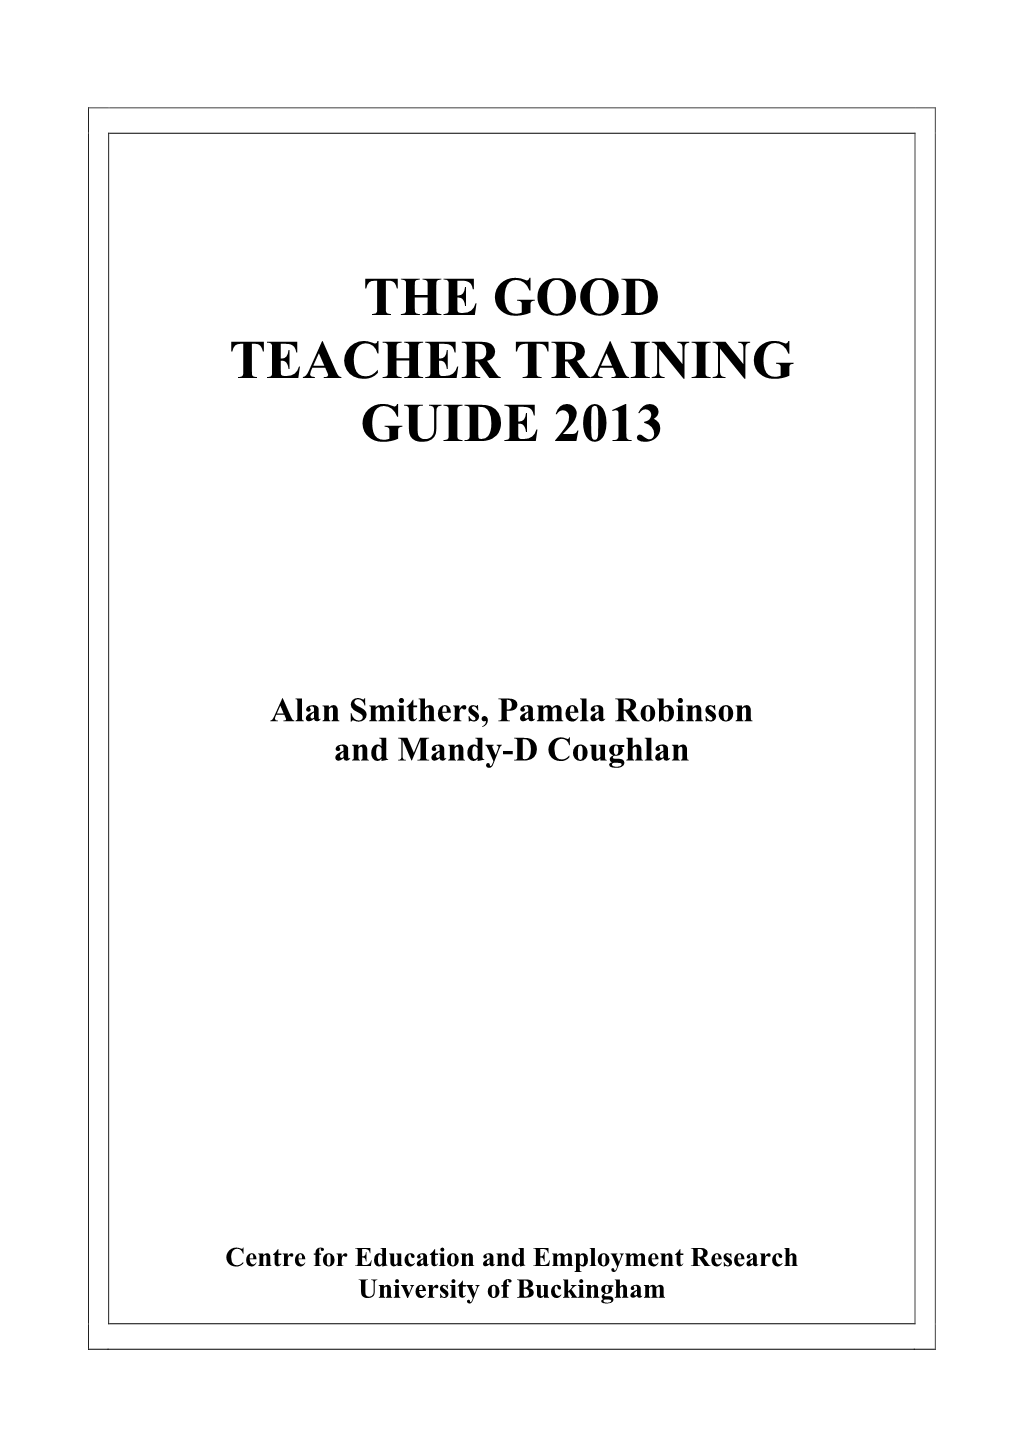 Good Teacher Training Guide 2013